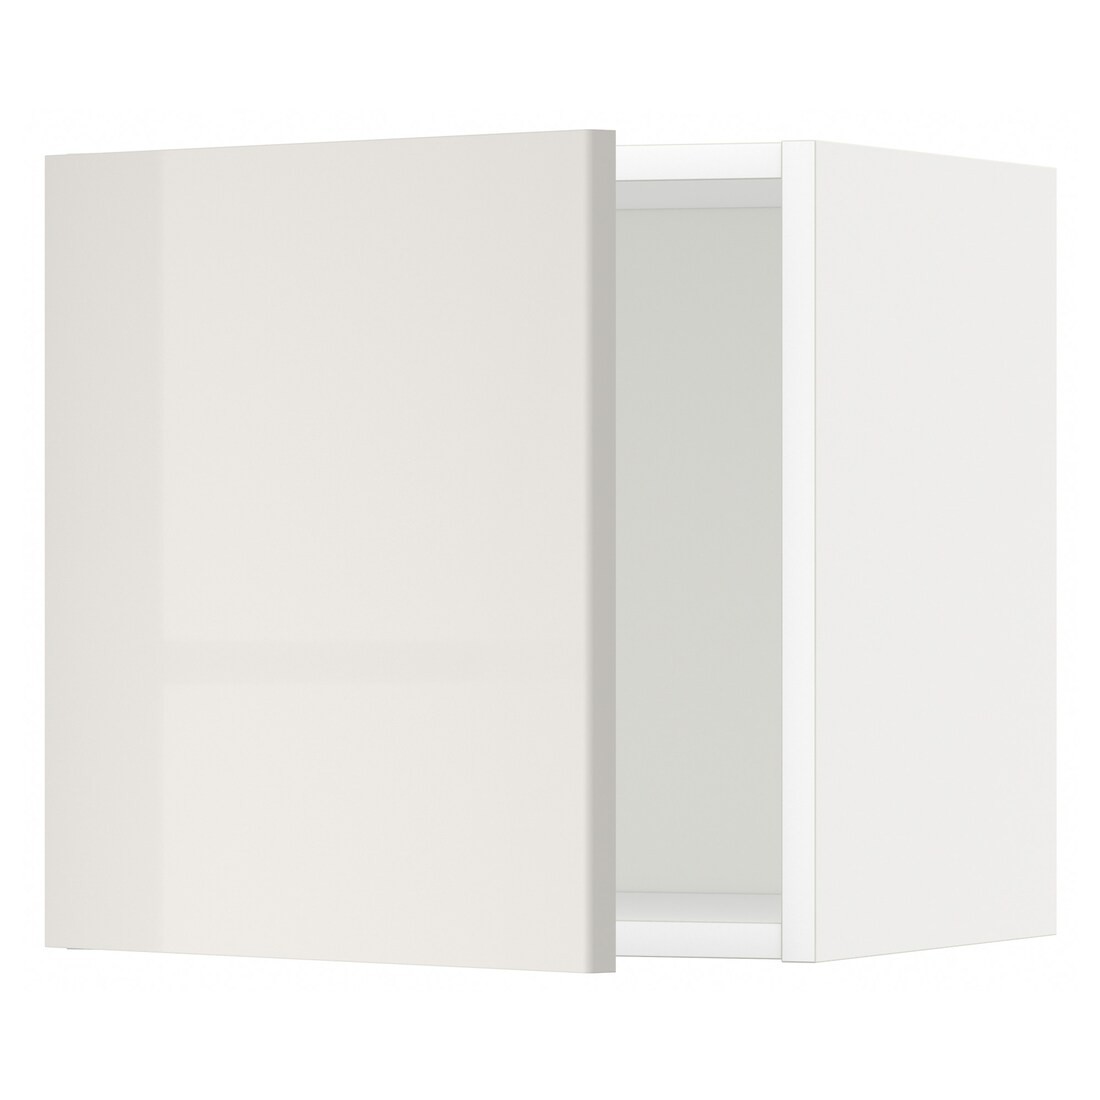 IKEA METOD МЕТОД Настенный шкаф, белый / Ringhult светло-серый, 40x40 см 89455214 894.552.14